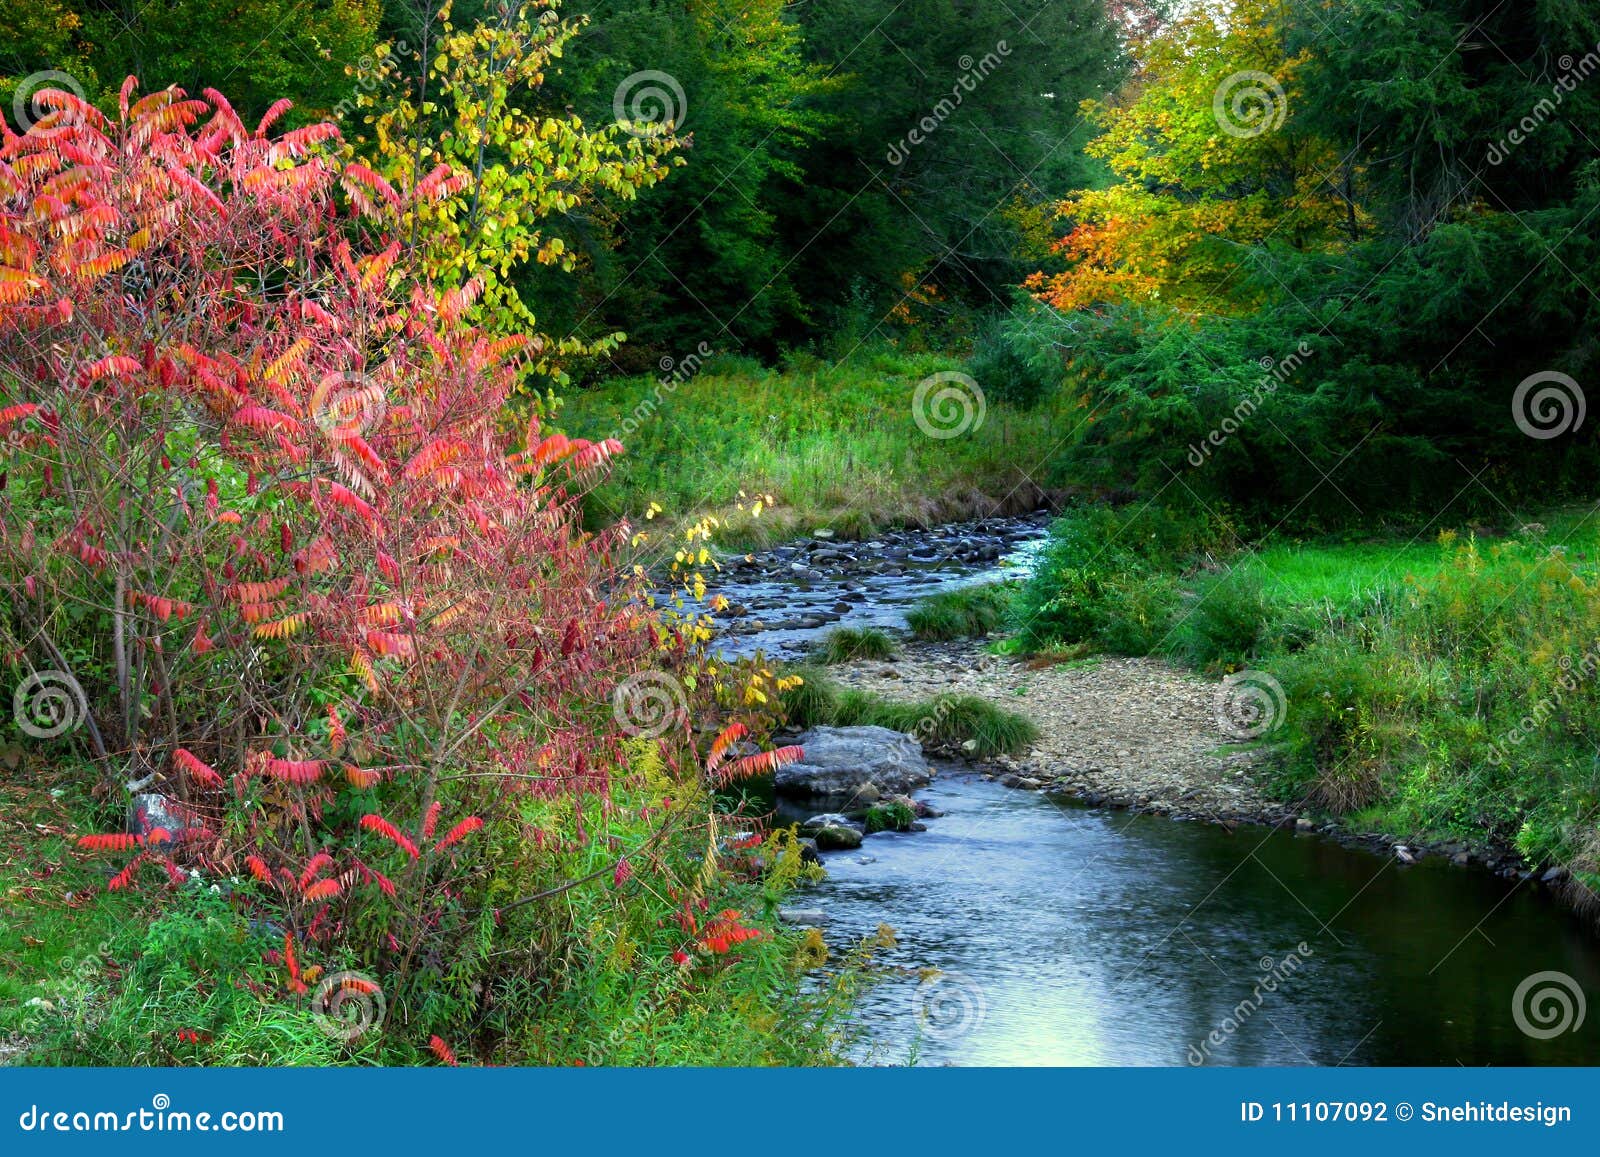 scenic autumn landscape in pennsylvania